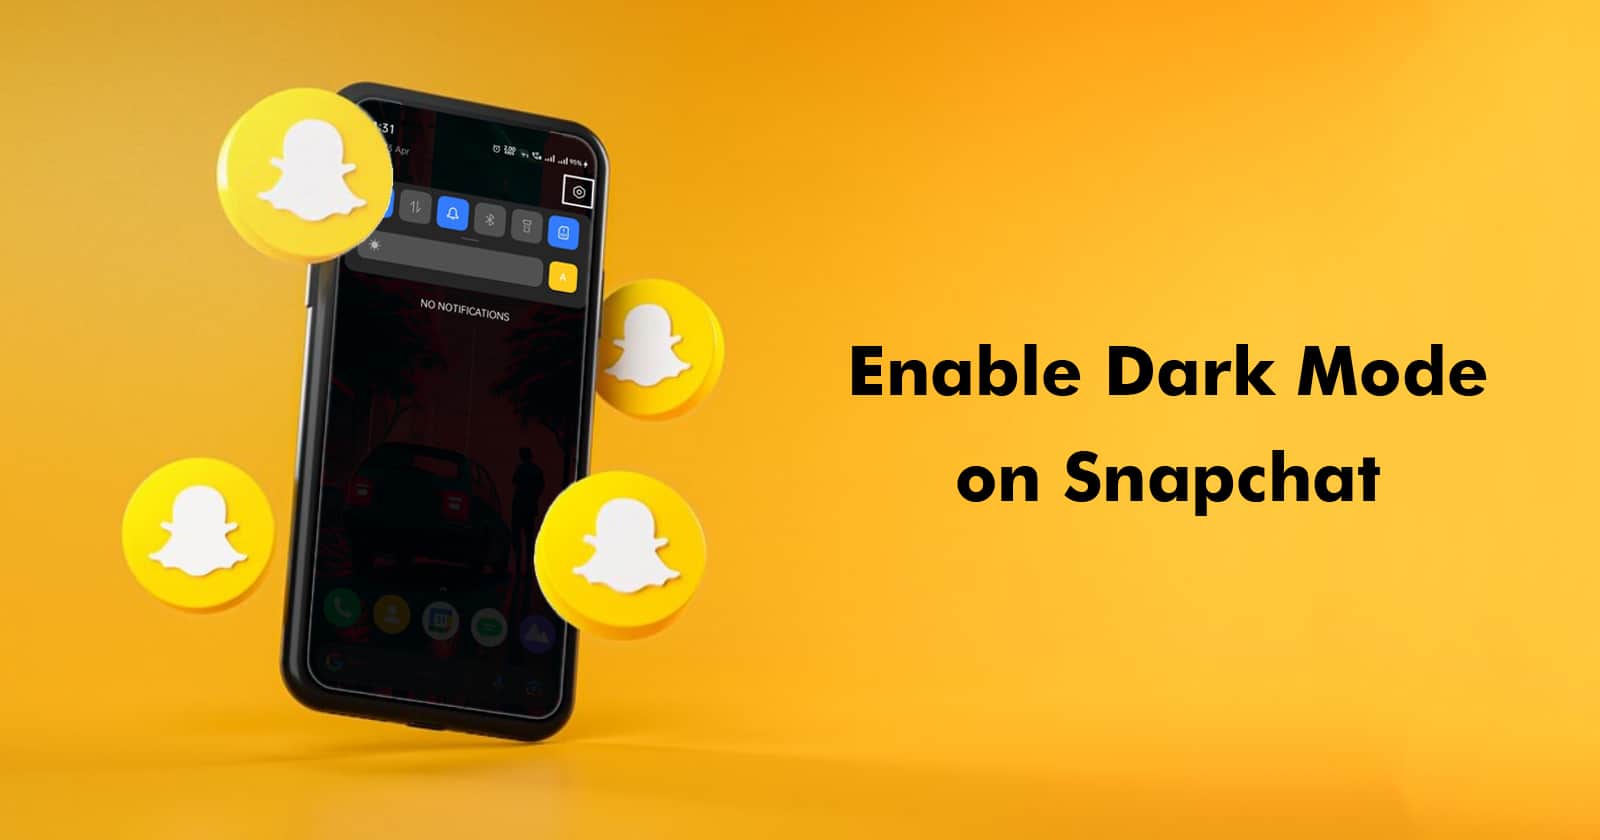 Enable Dark Mode on snapchat